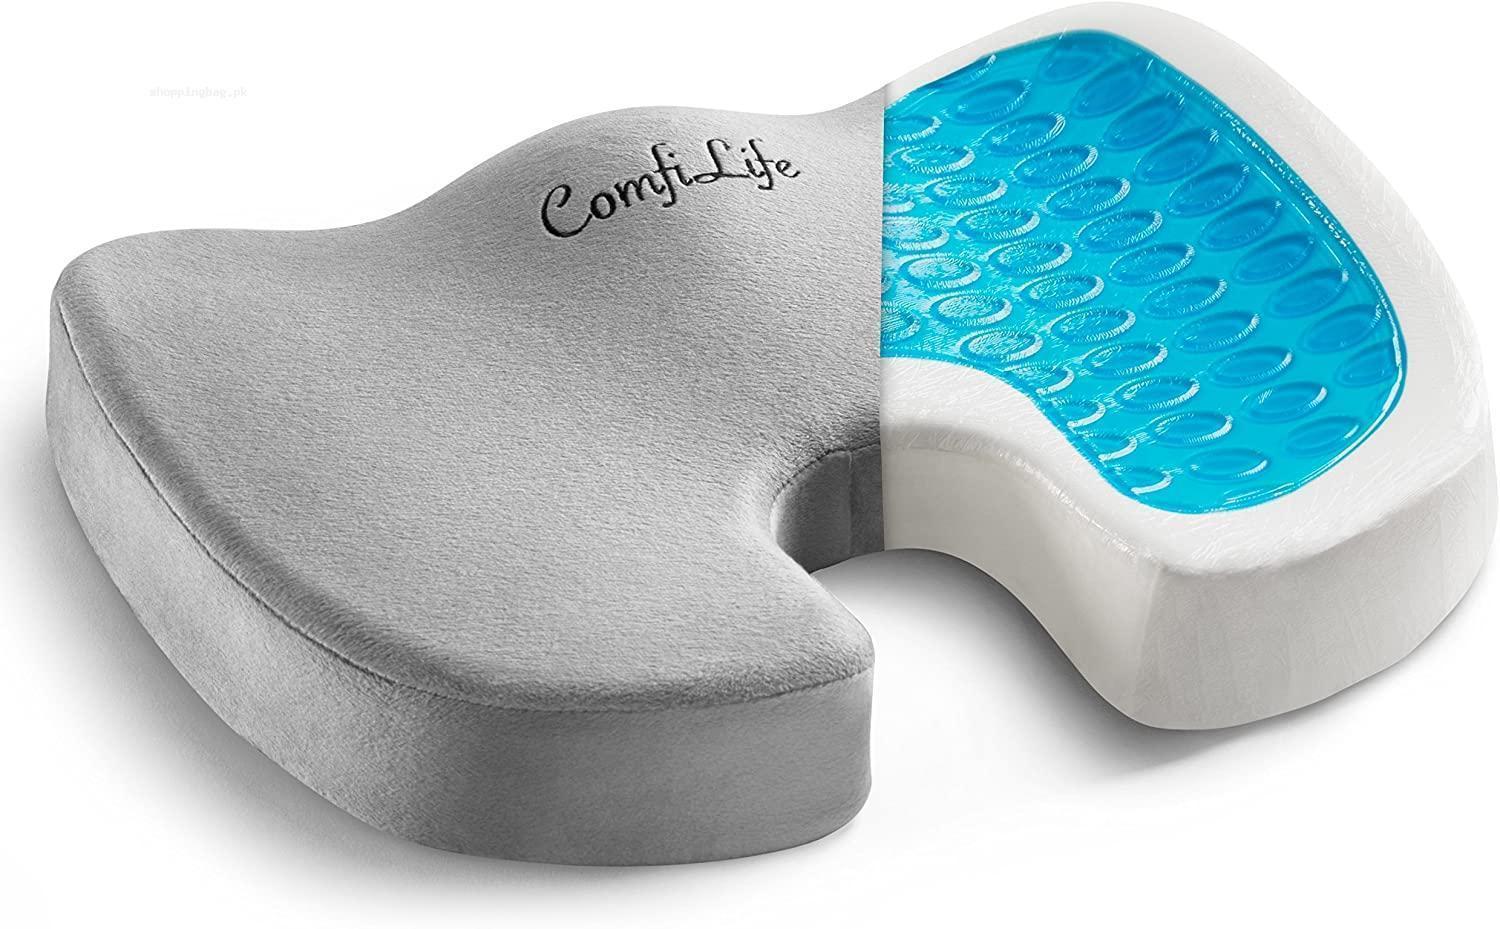 ComfiLife Orthopedic Gel Sciatica & Back Pain Relief Seat Cushion